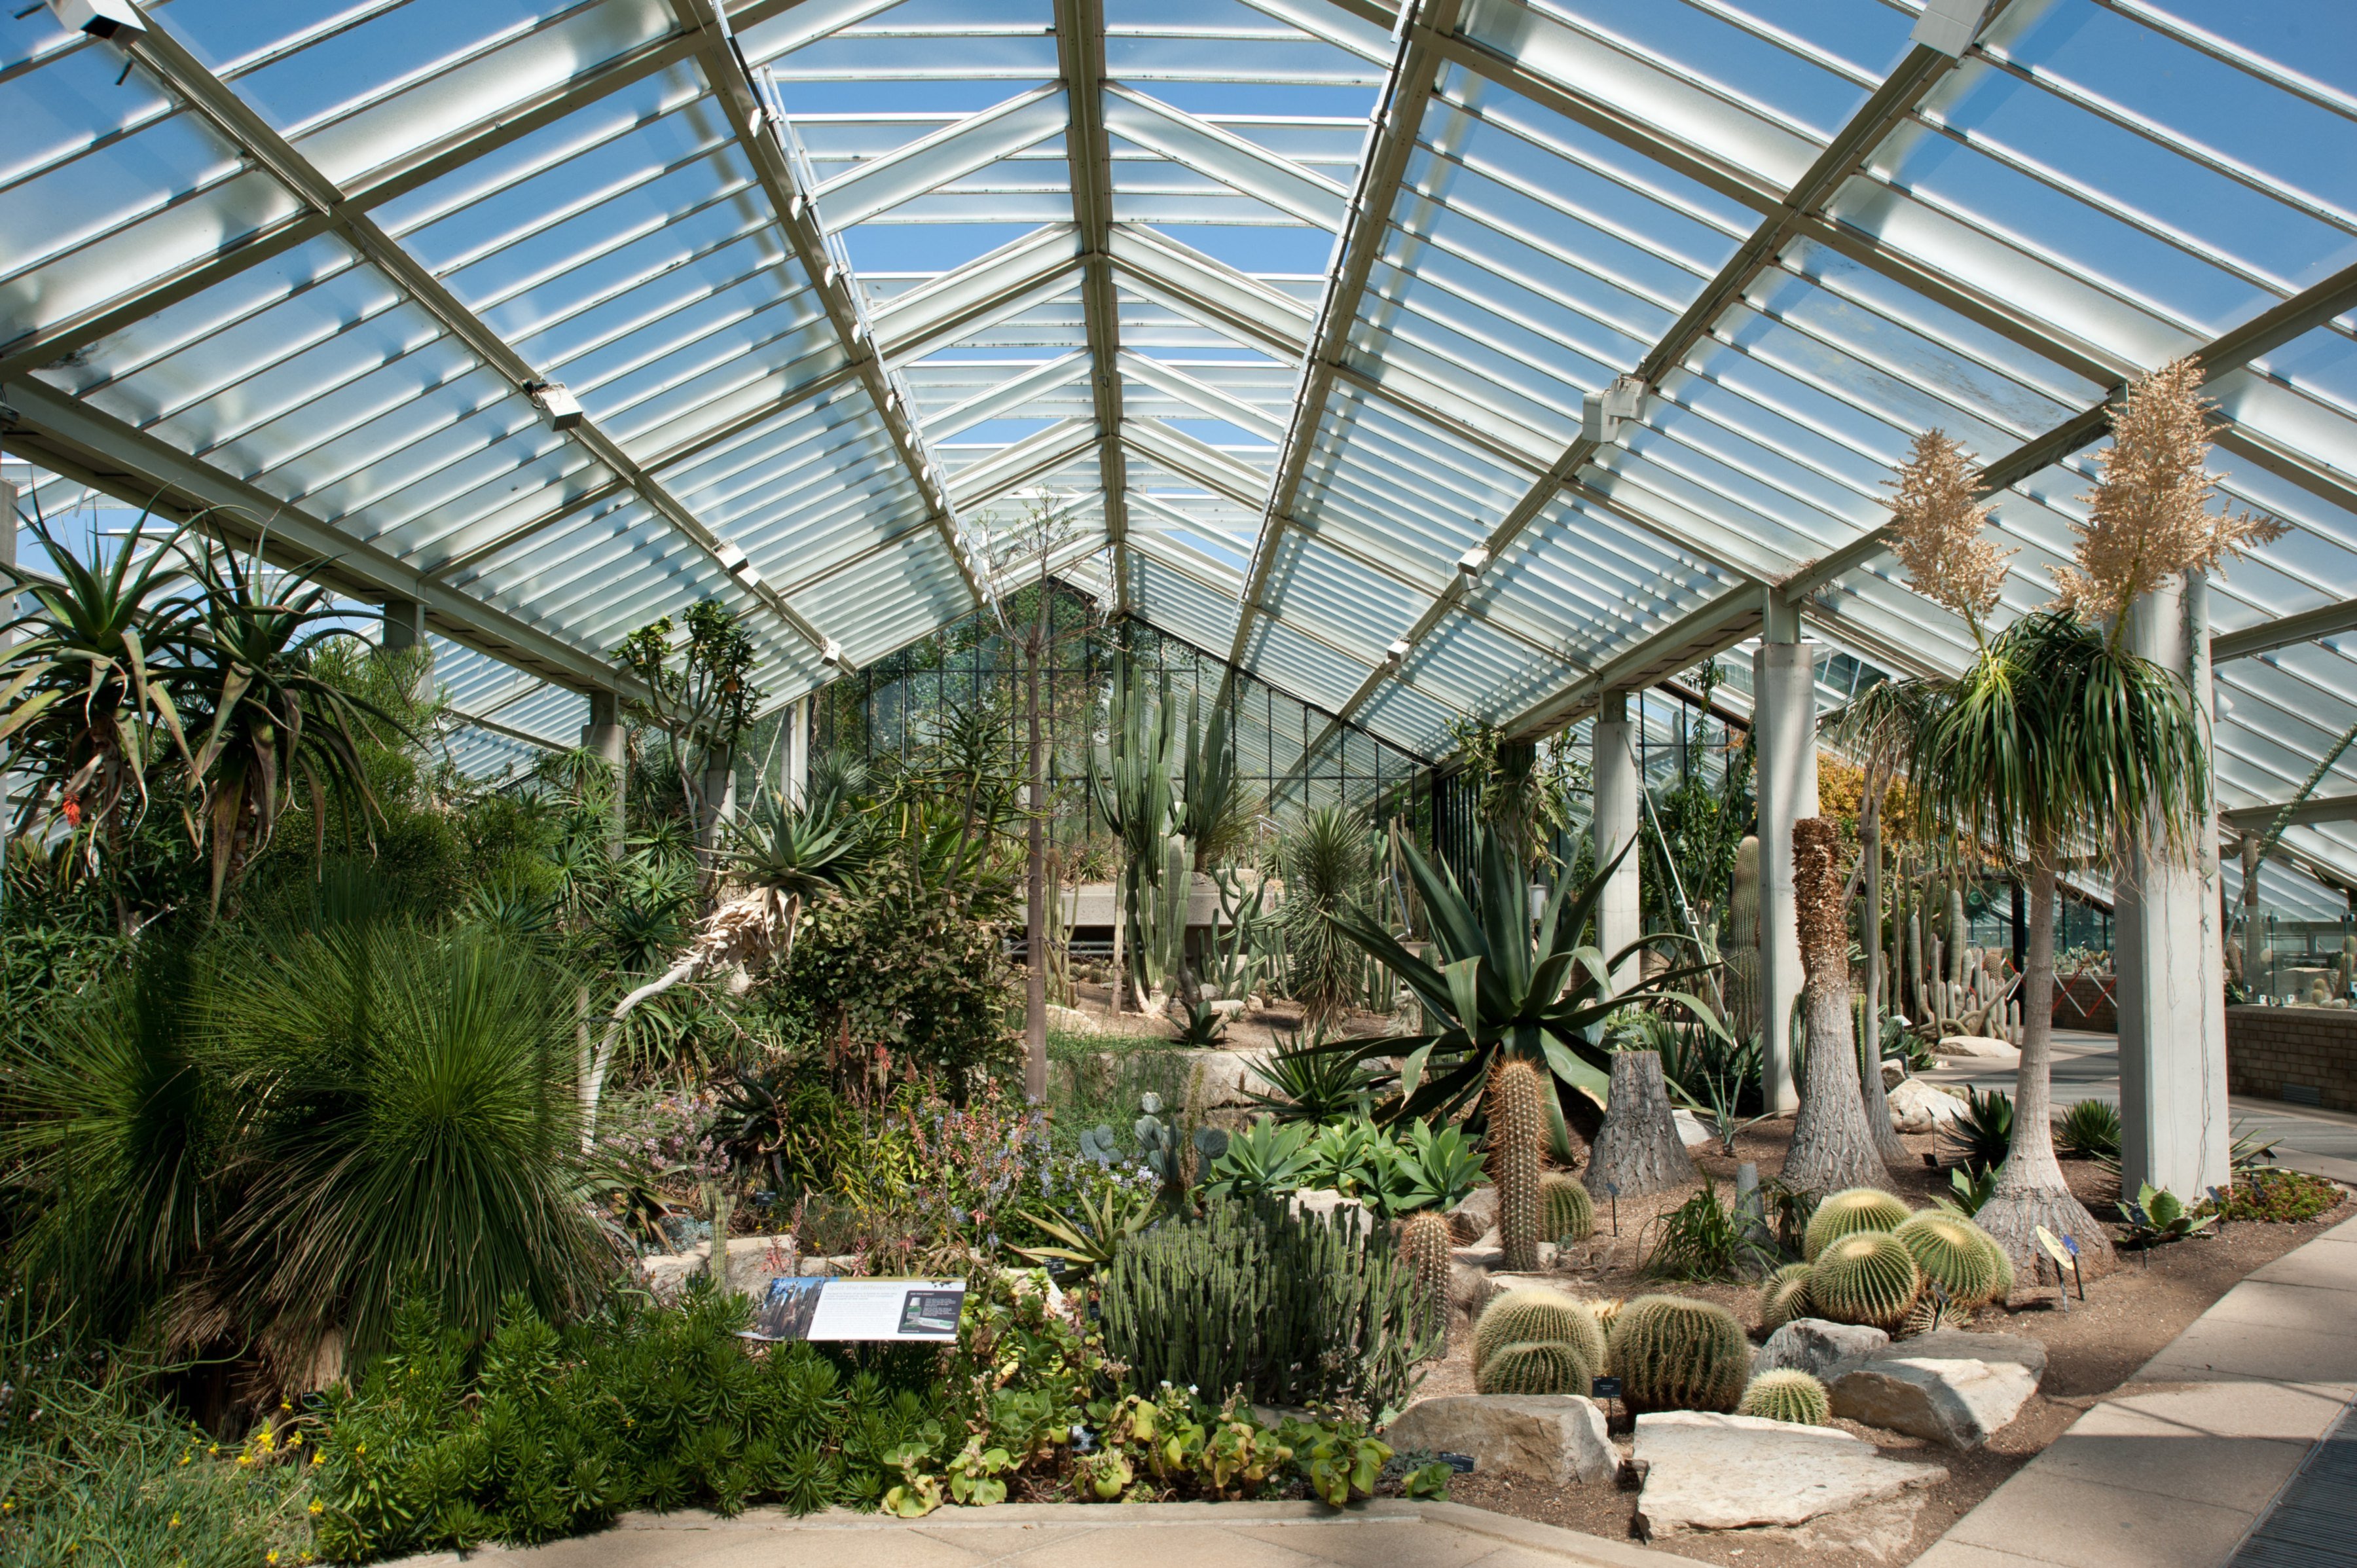 Princess Conservatory at Kew Gardens